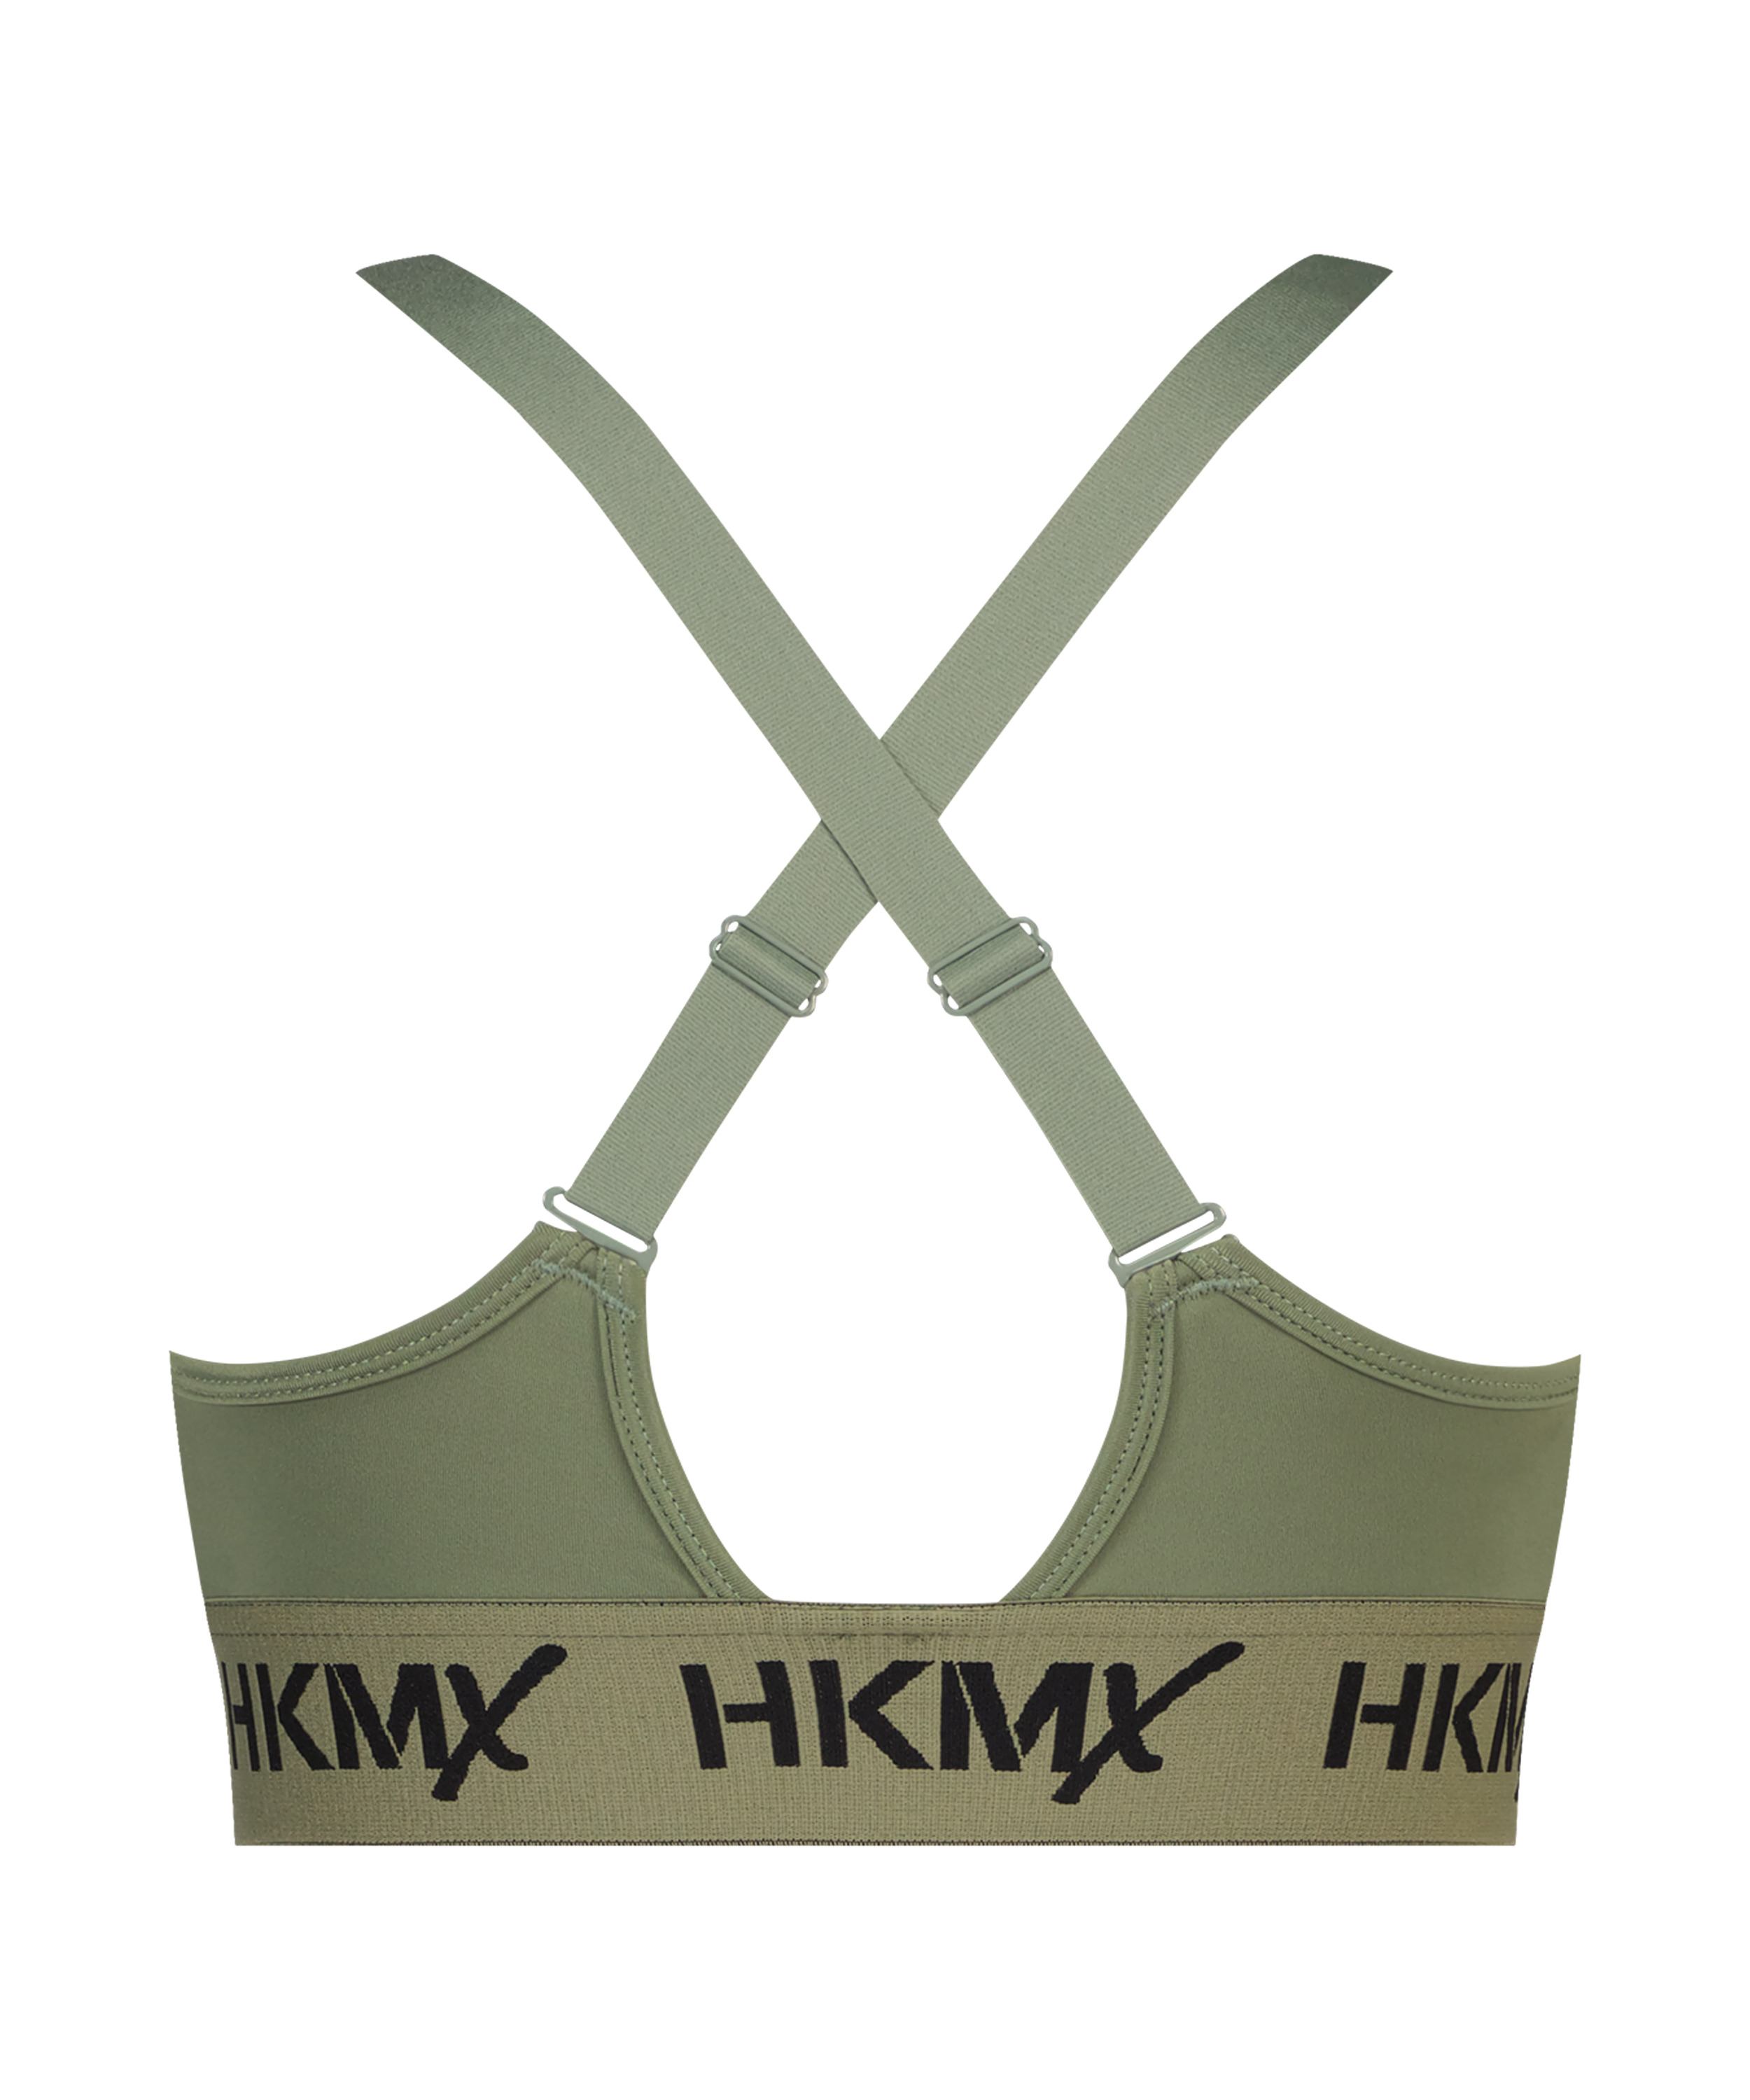 HKMX Sujetador deportivo The Crop Logo nivel 1, Verde, main